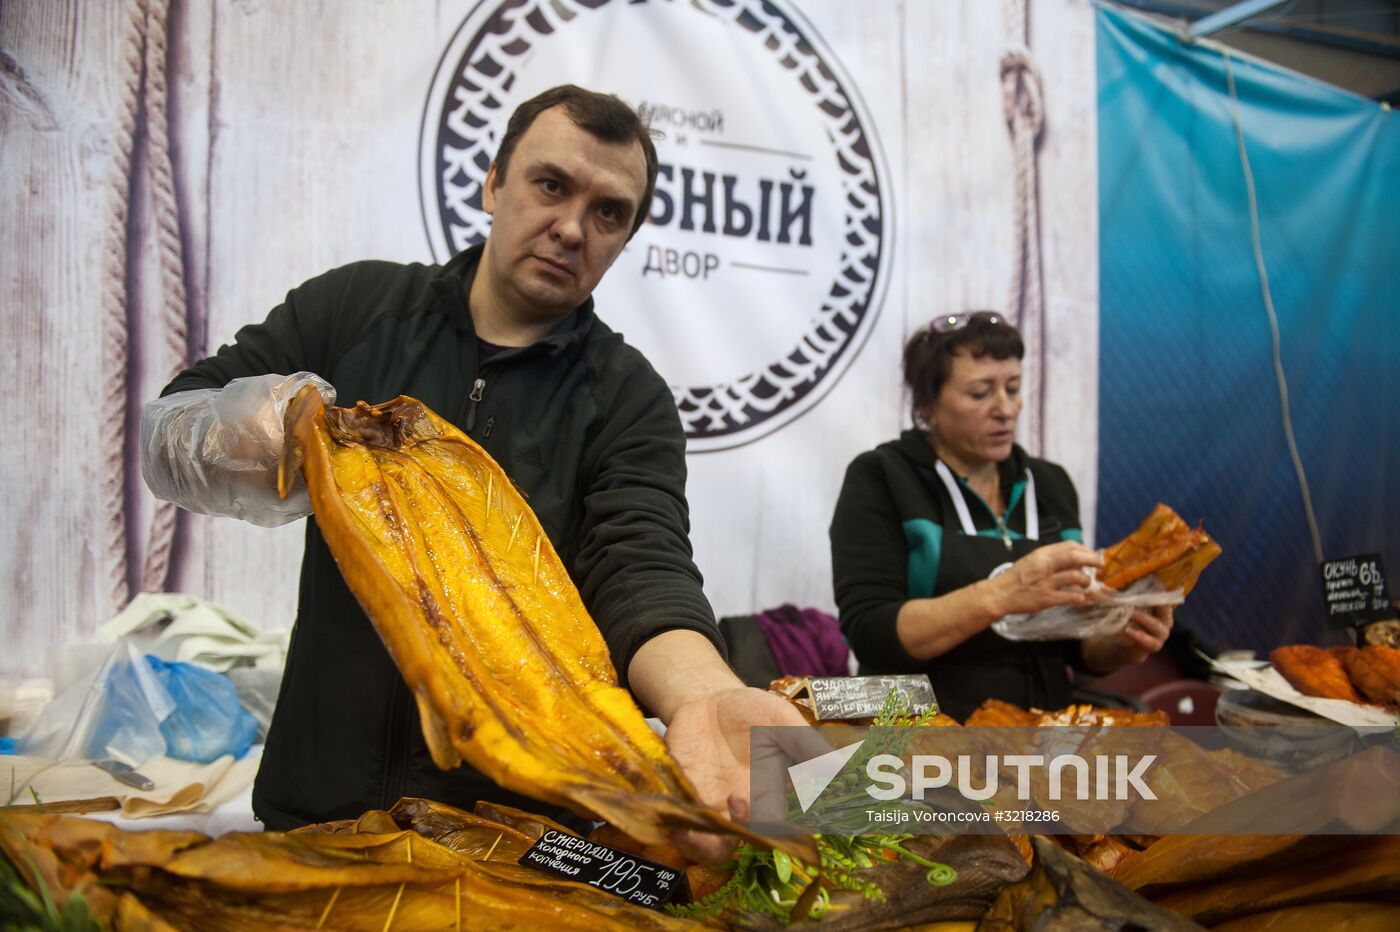 Golden Autumn agricultural exhibition in Tomsk